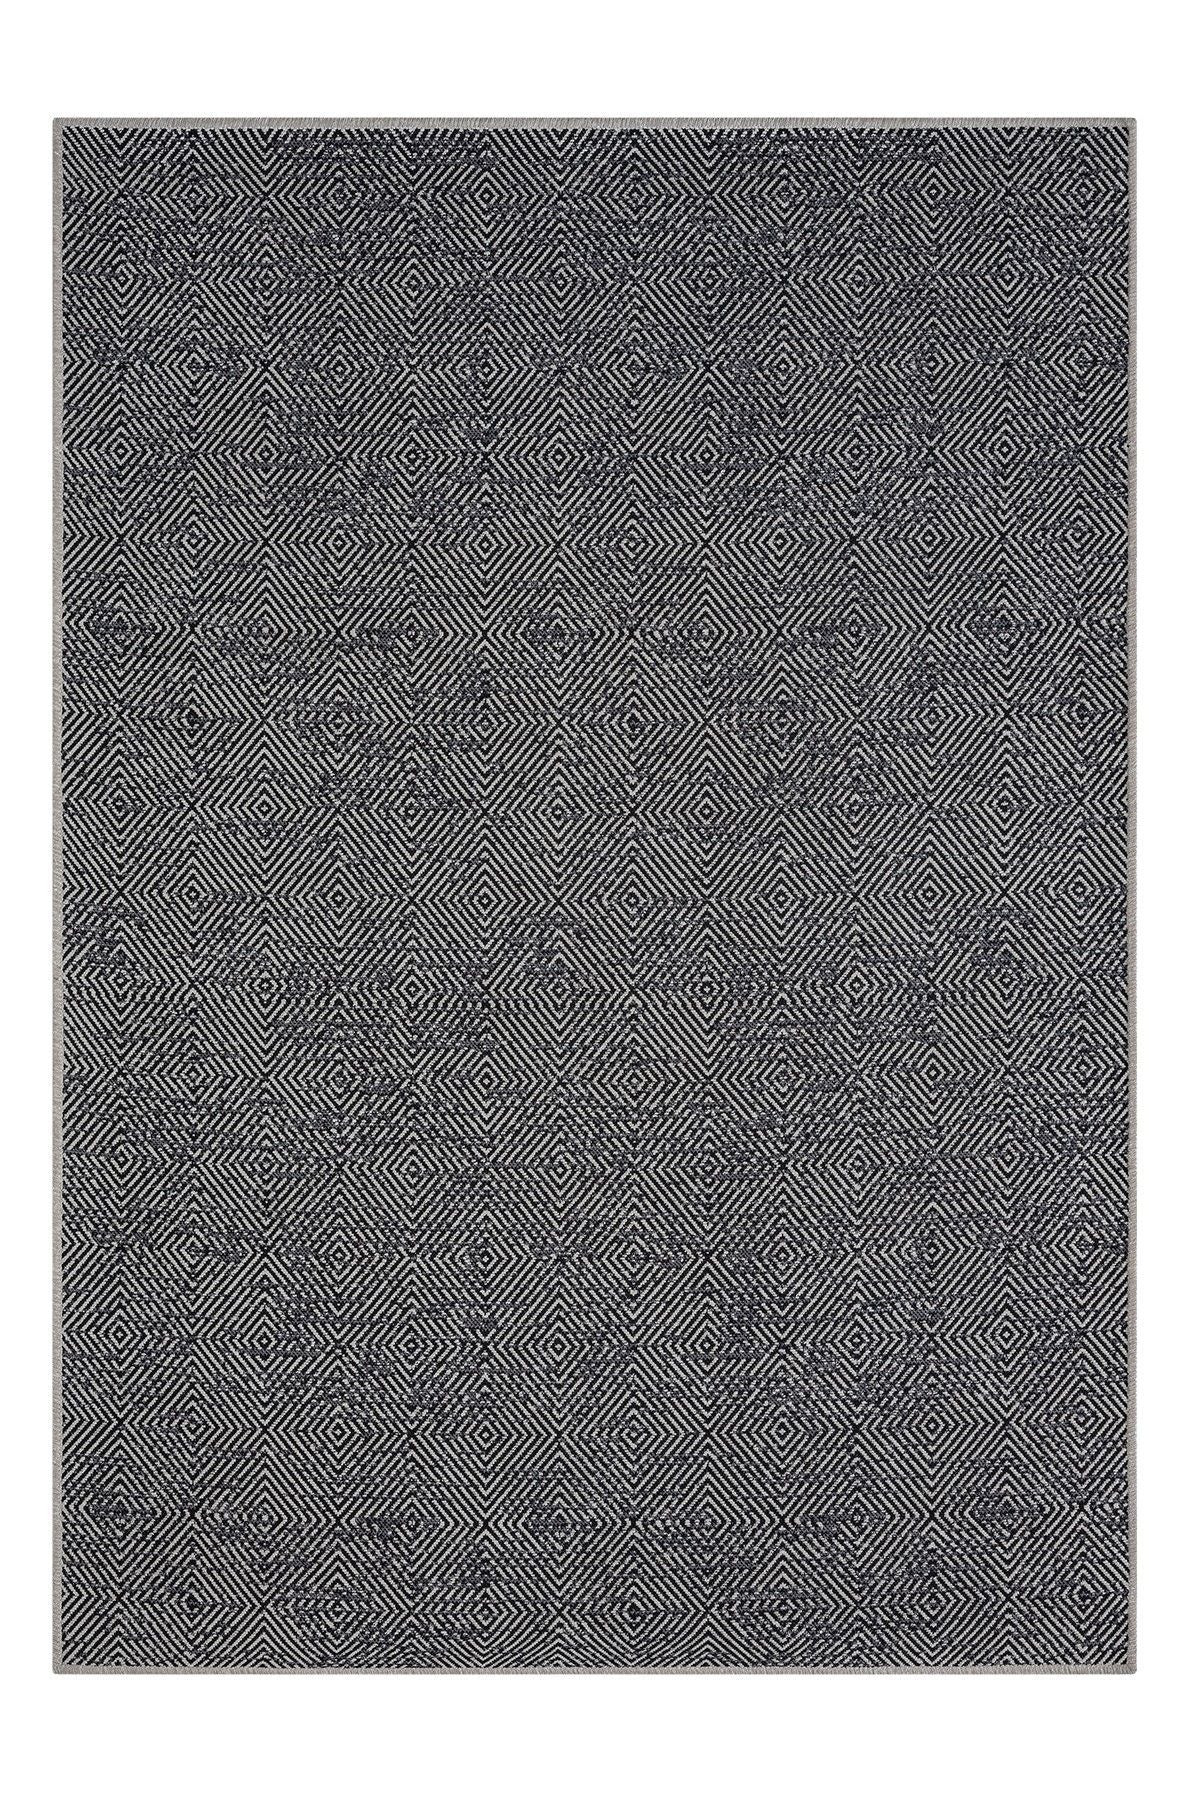 Terapia 3509 - Carpet (120 x 180)